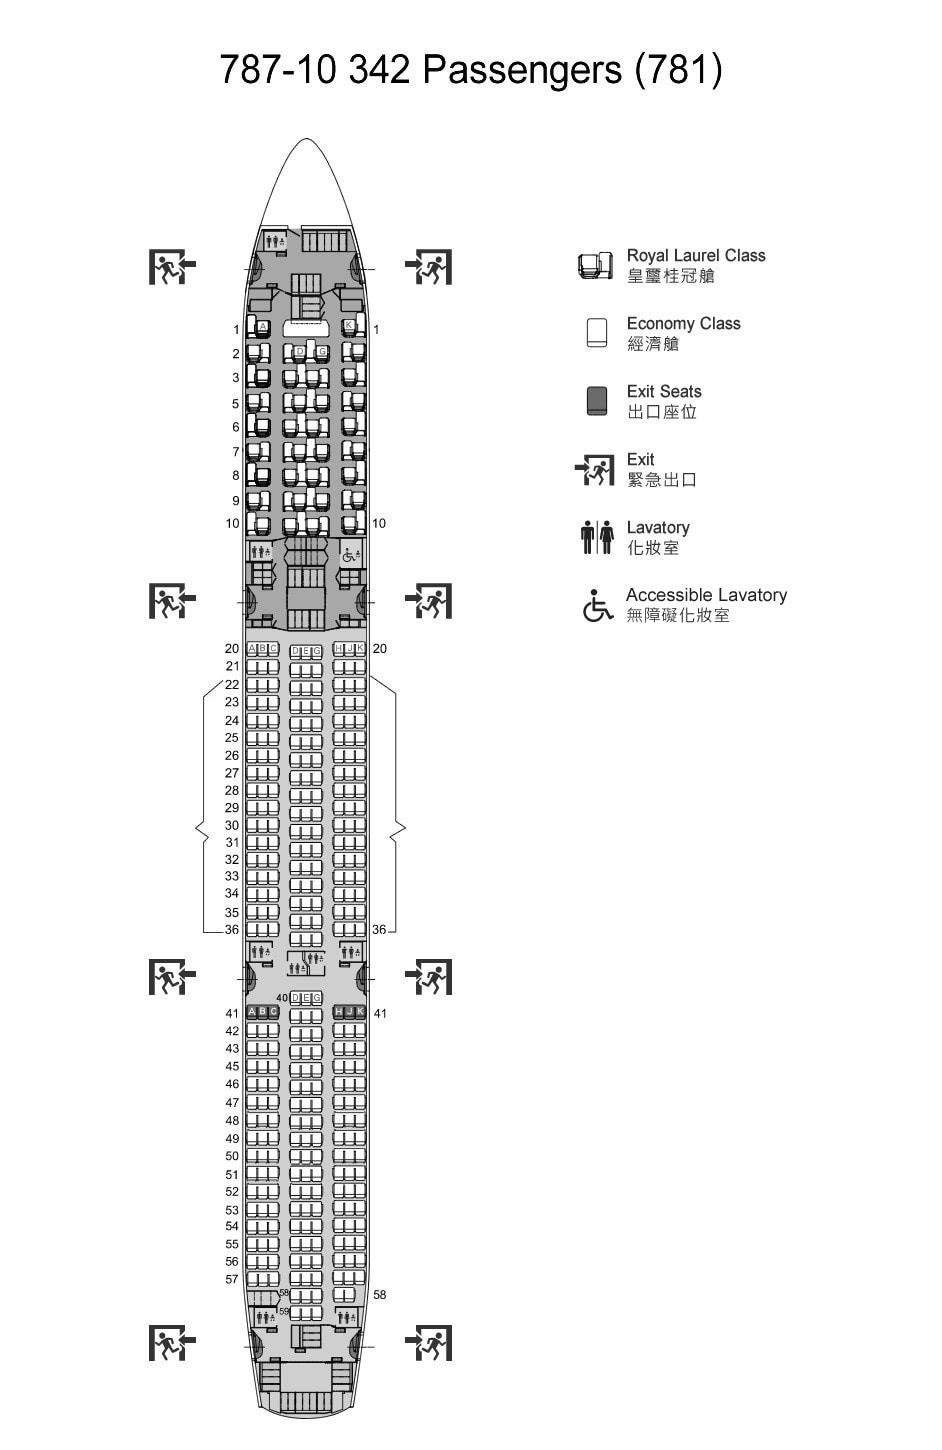 787-10 seat map